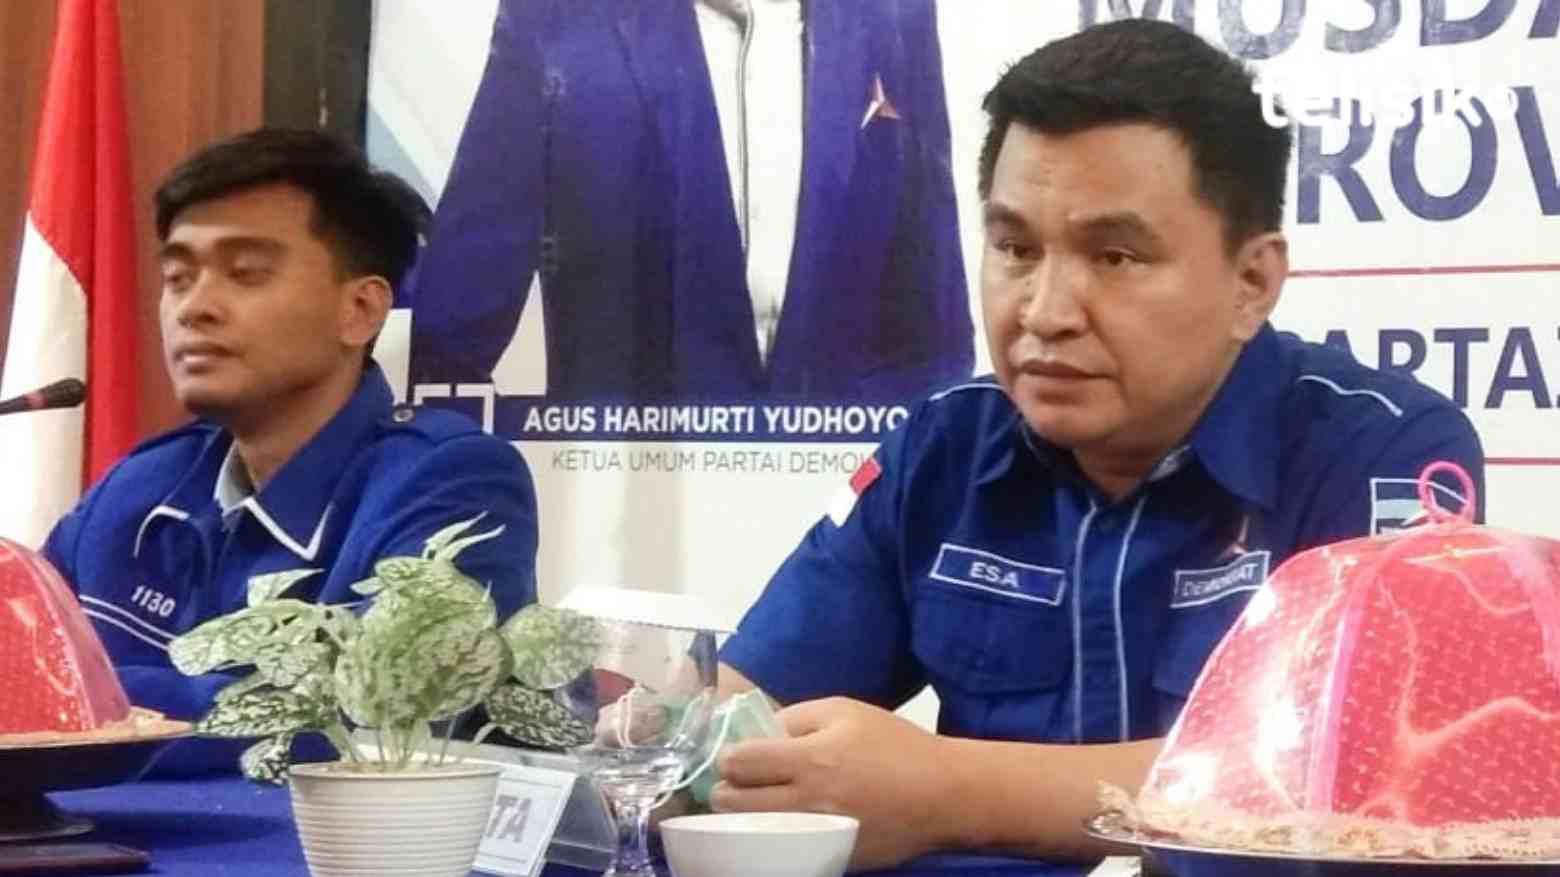 Respon Bentrokan Kelompok, Ketua Demokrat Sultra Minta Warga Saling Jaga Keamanan